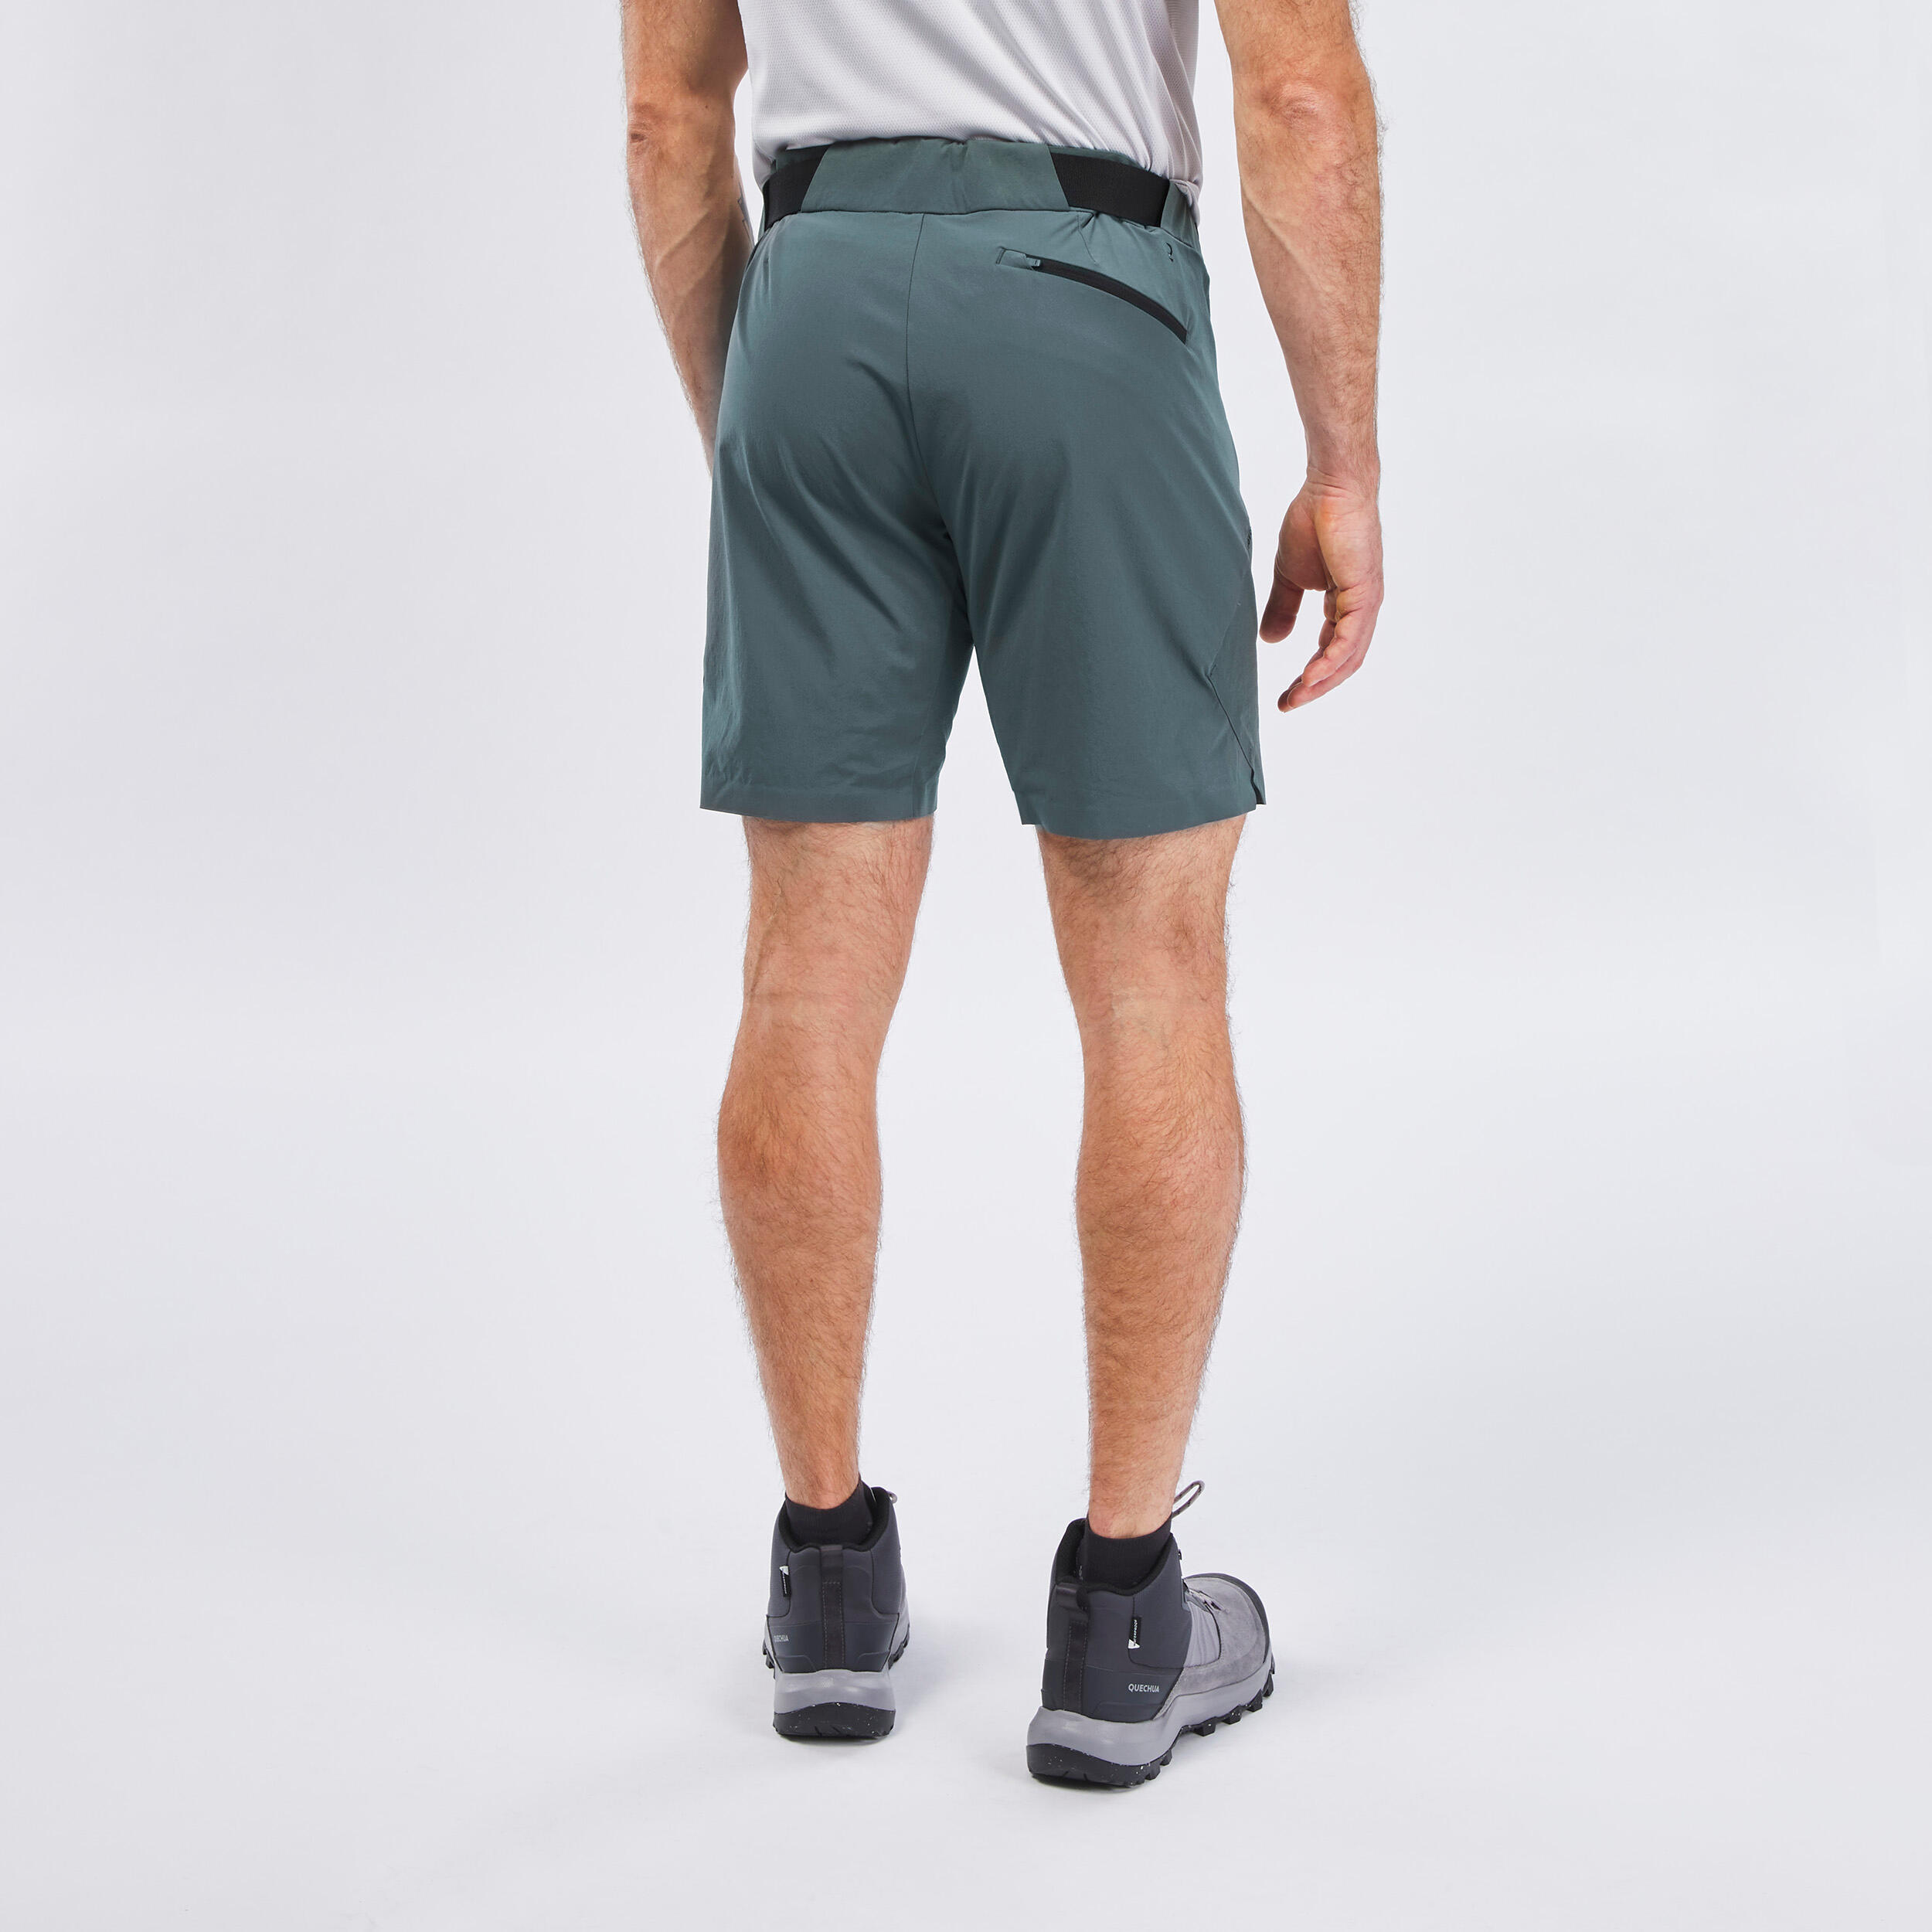 Men's Short Mountain Shorts - MH500 3/6